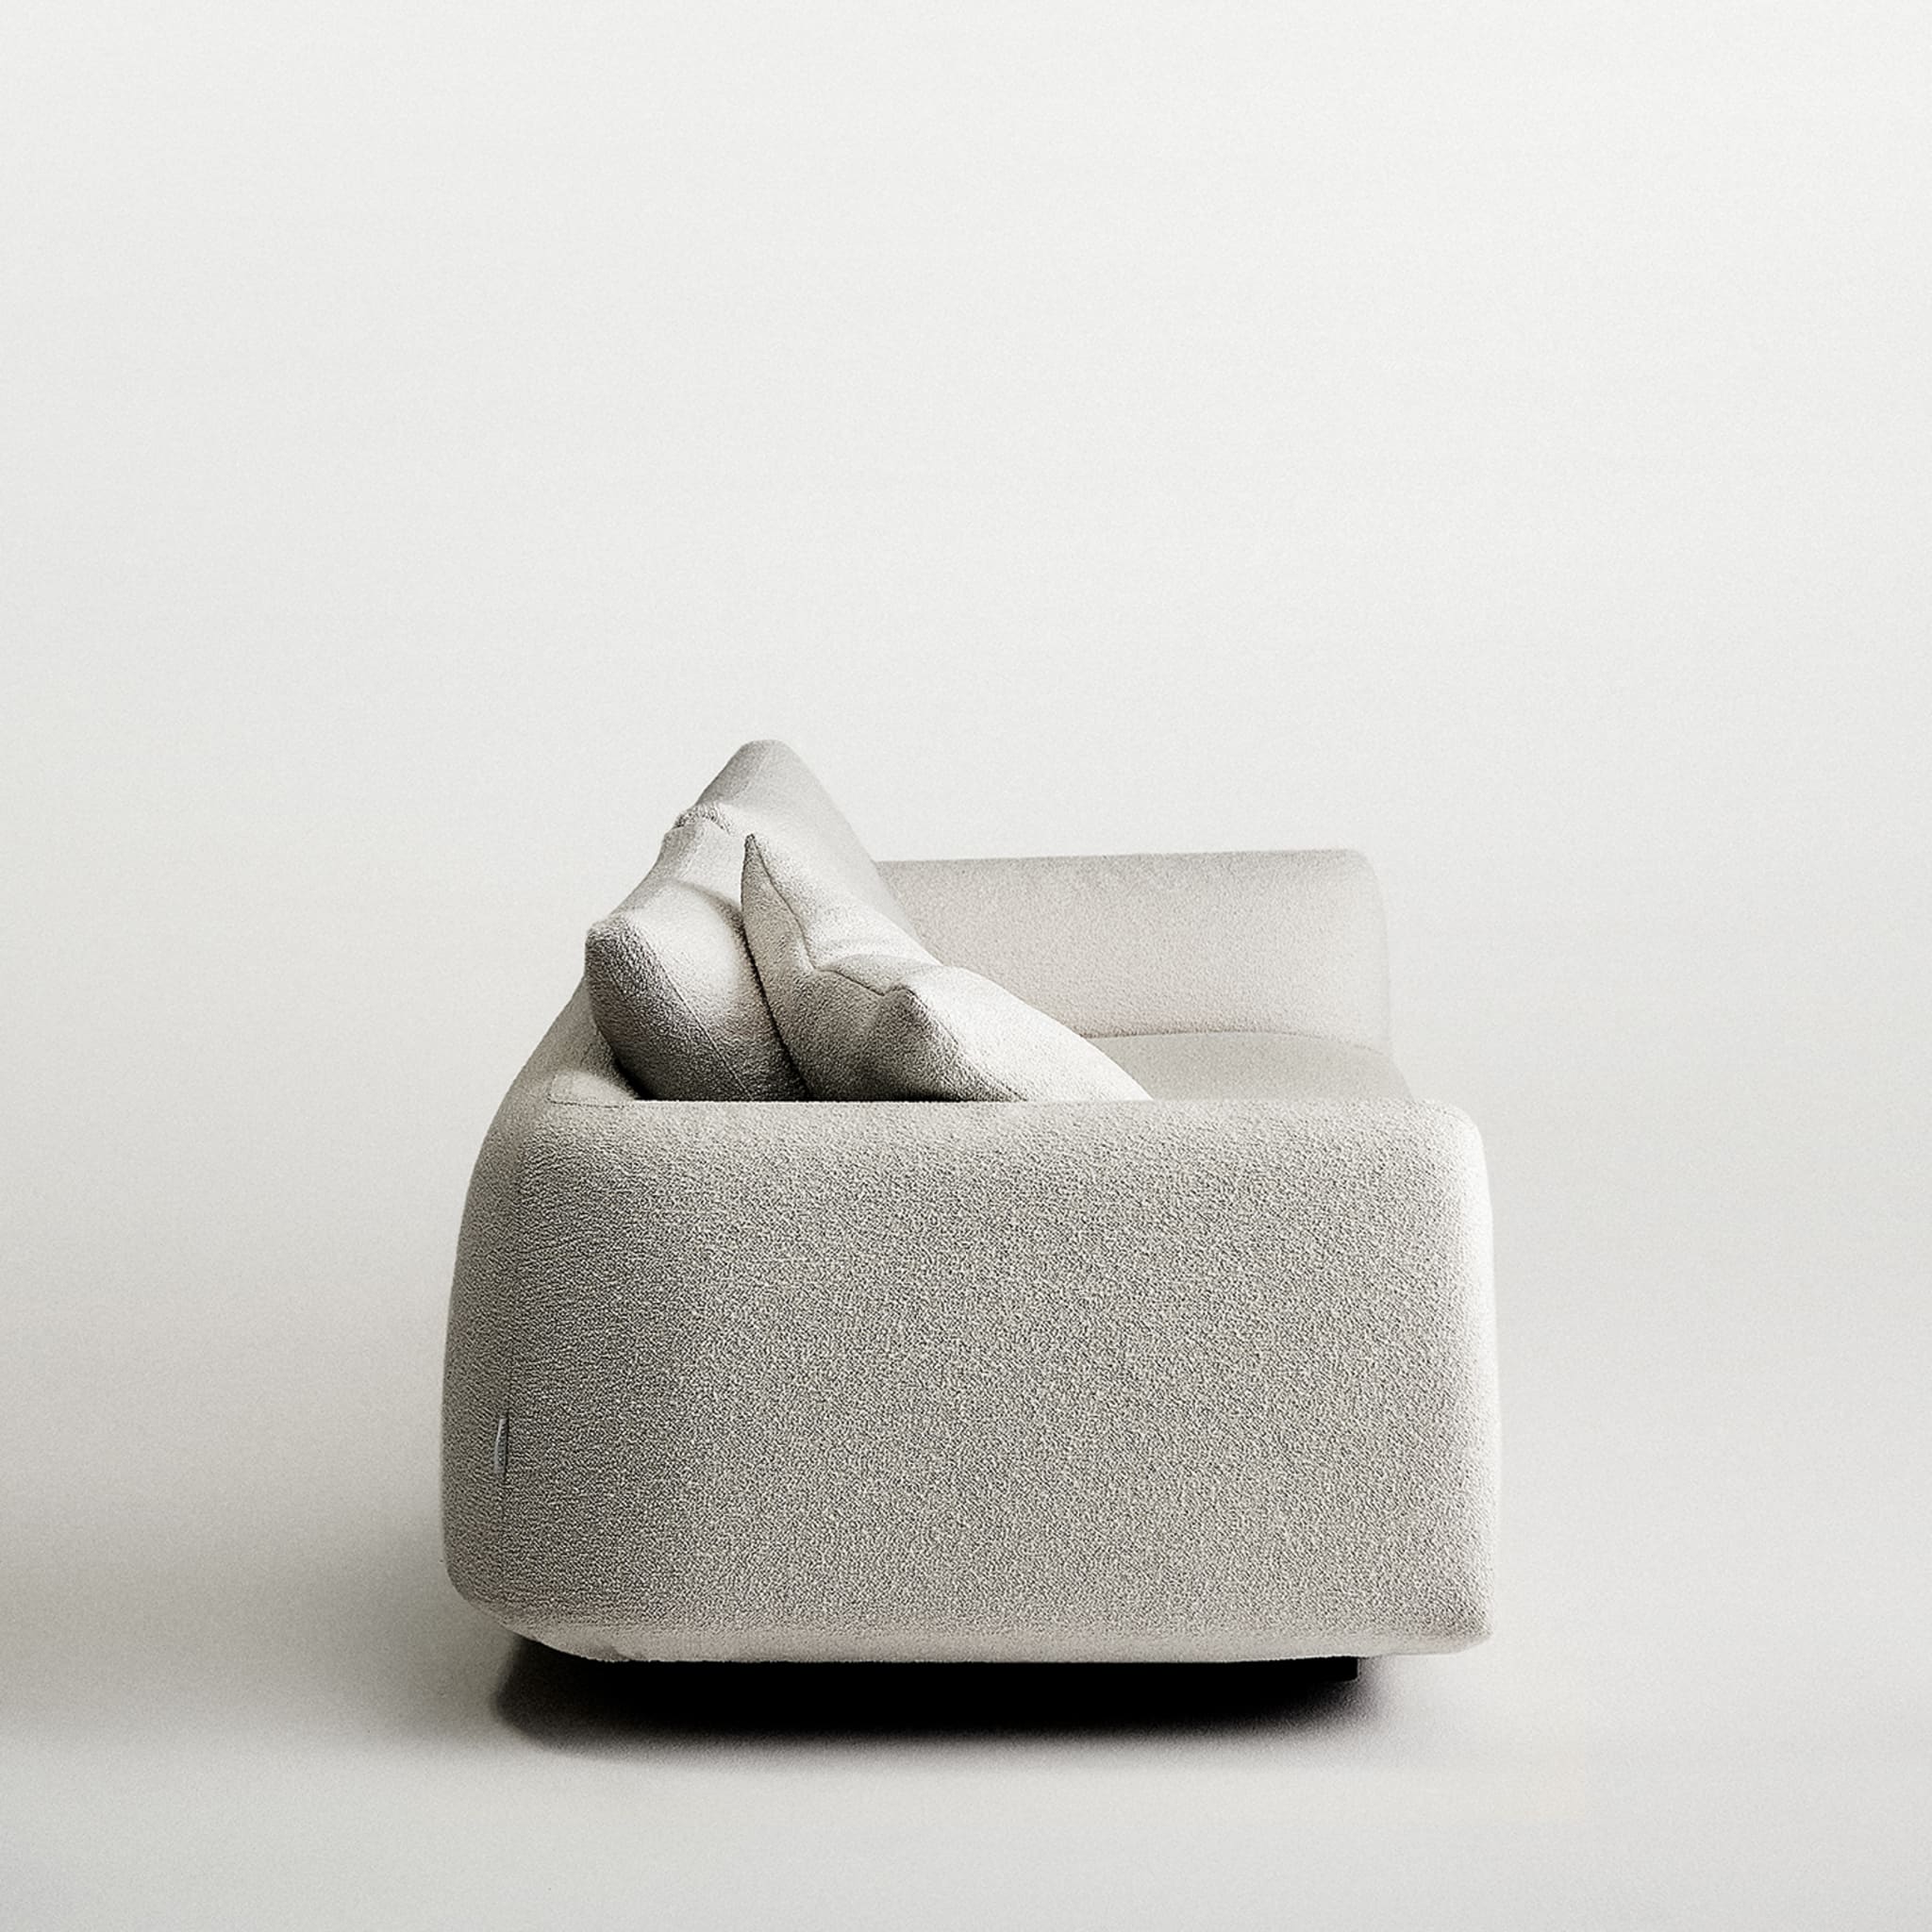 Naxos 3-sitzer weißes sofa von Ludovica + Roberto Palomba - Alternative Ansicht 2